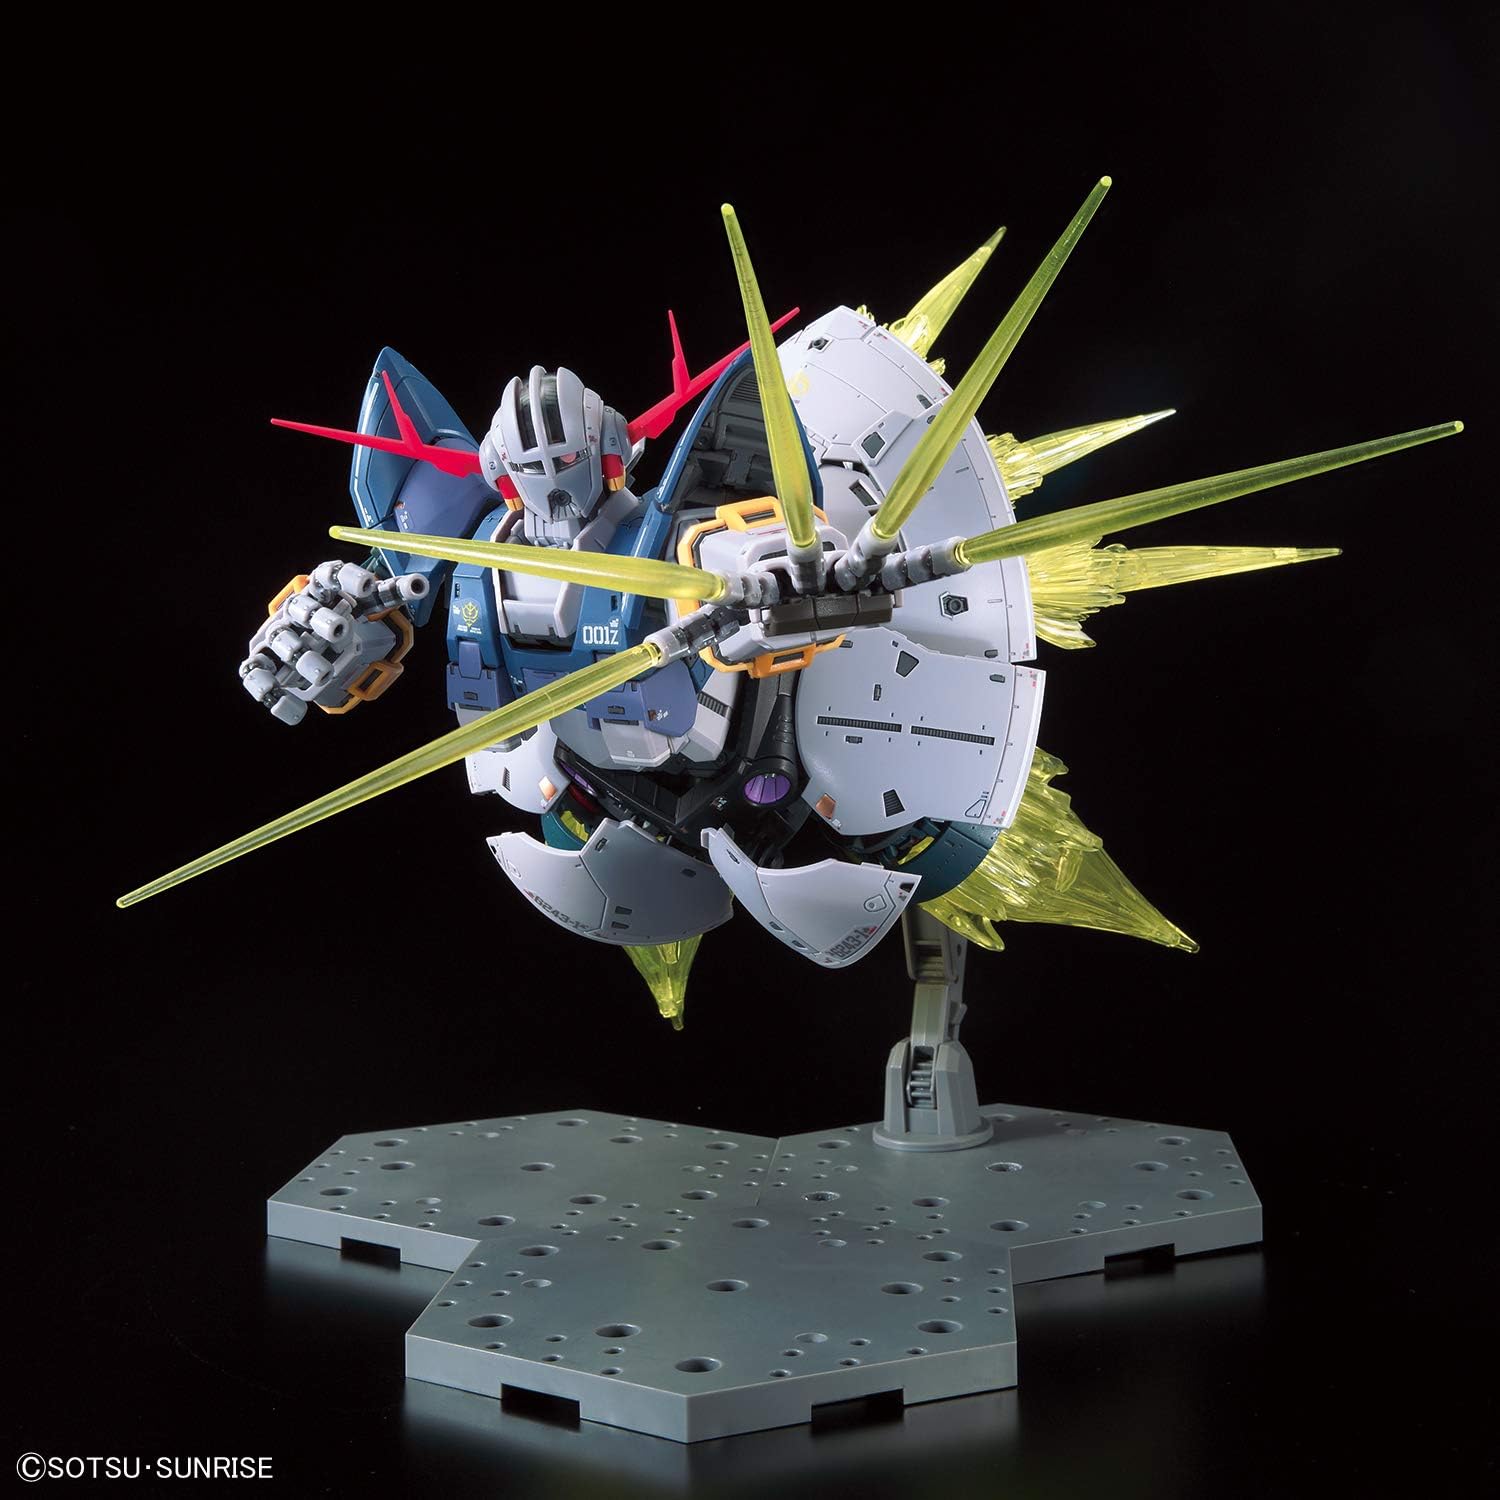 1/144 RG "Gundam" Last Shooting Zeong Effect Set | animota